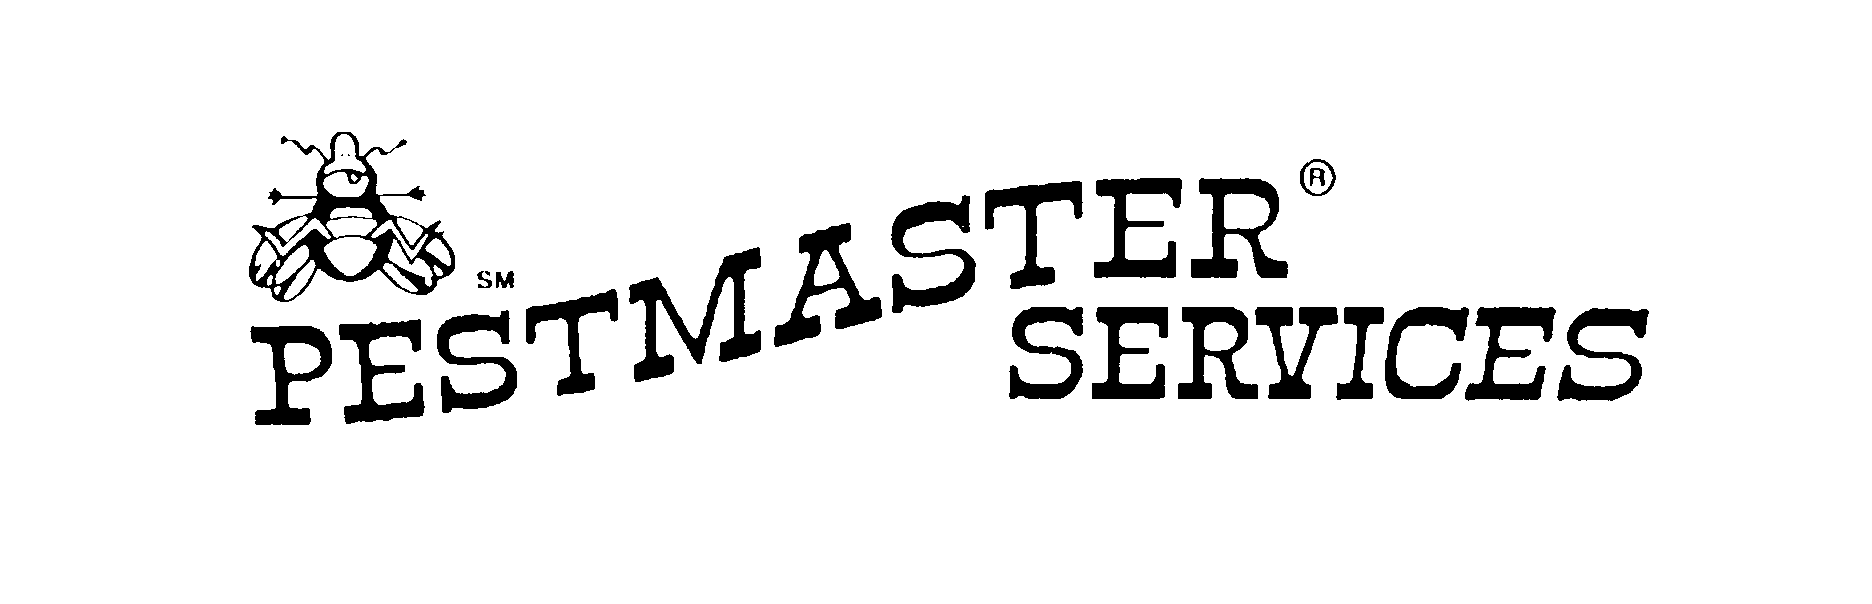 Pestmaster Services Logo